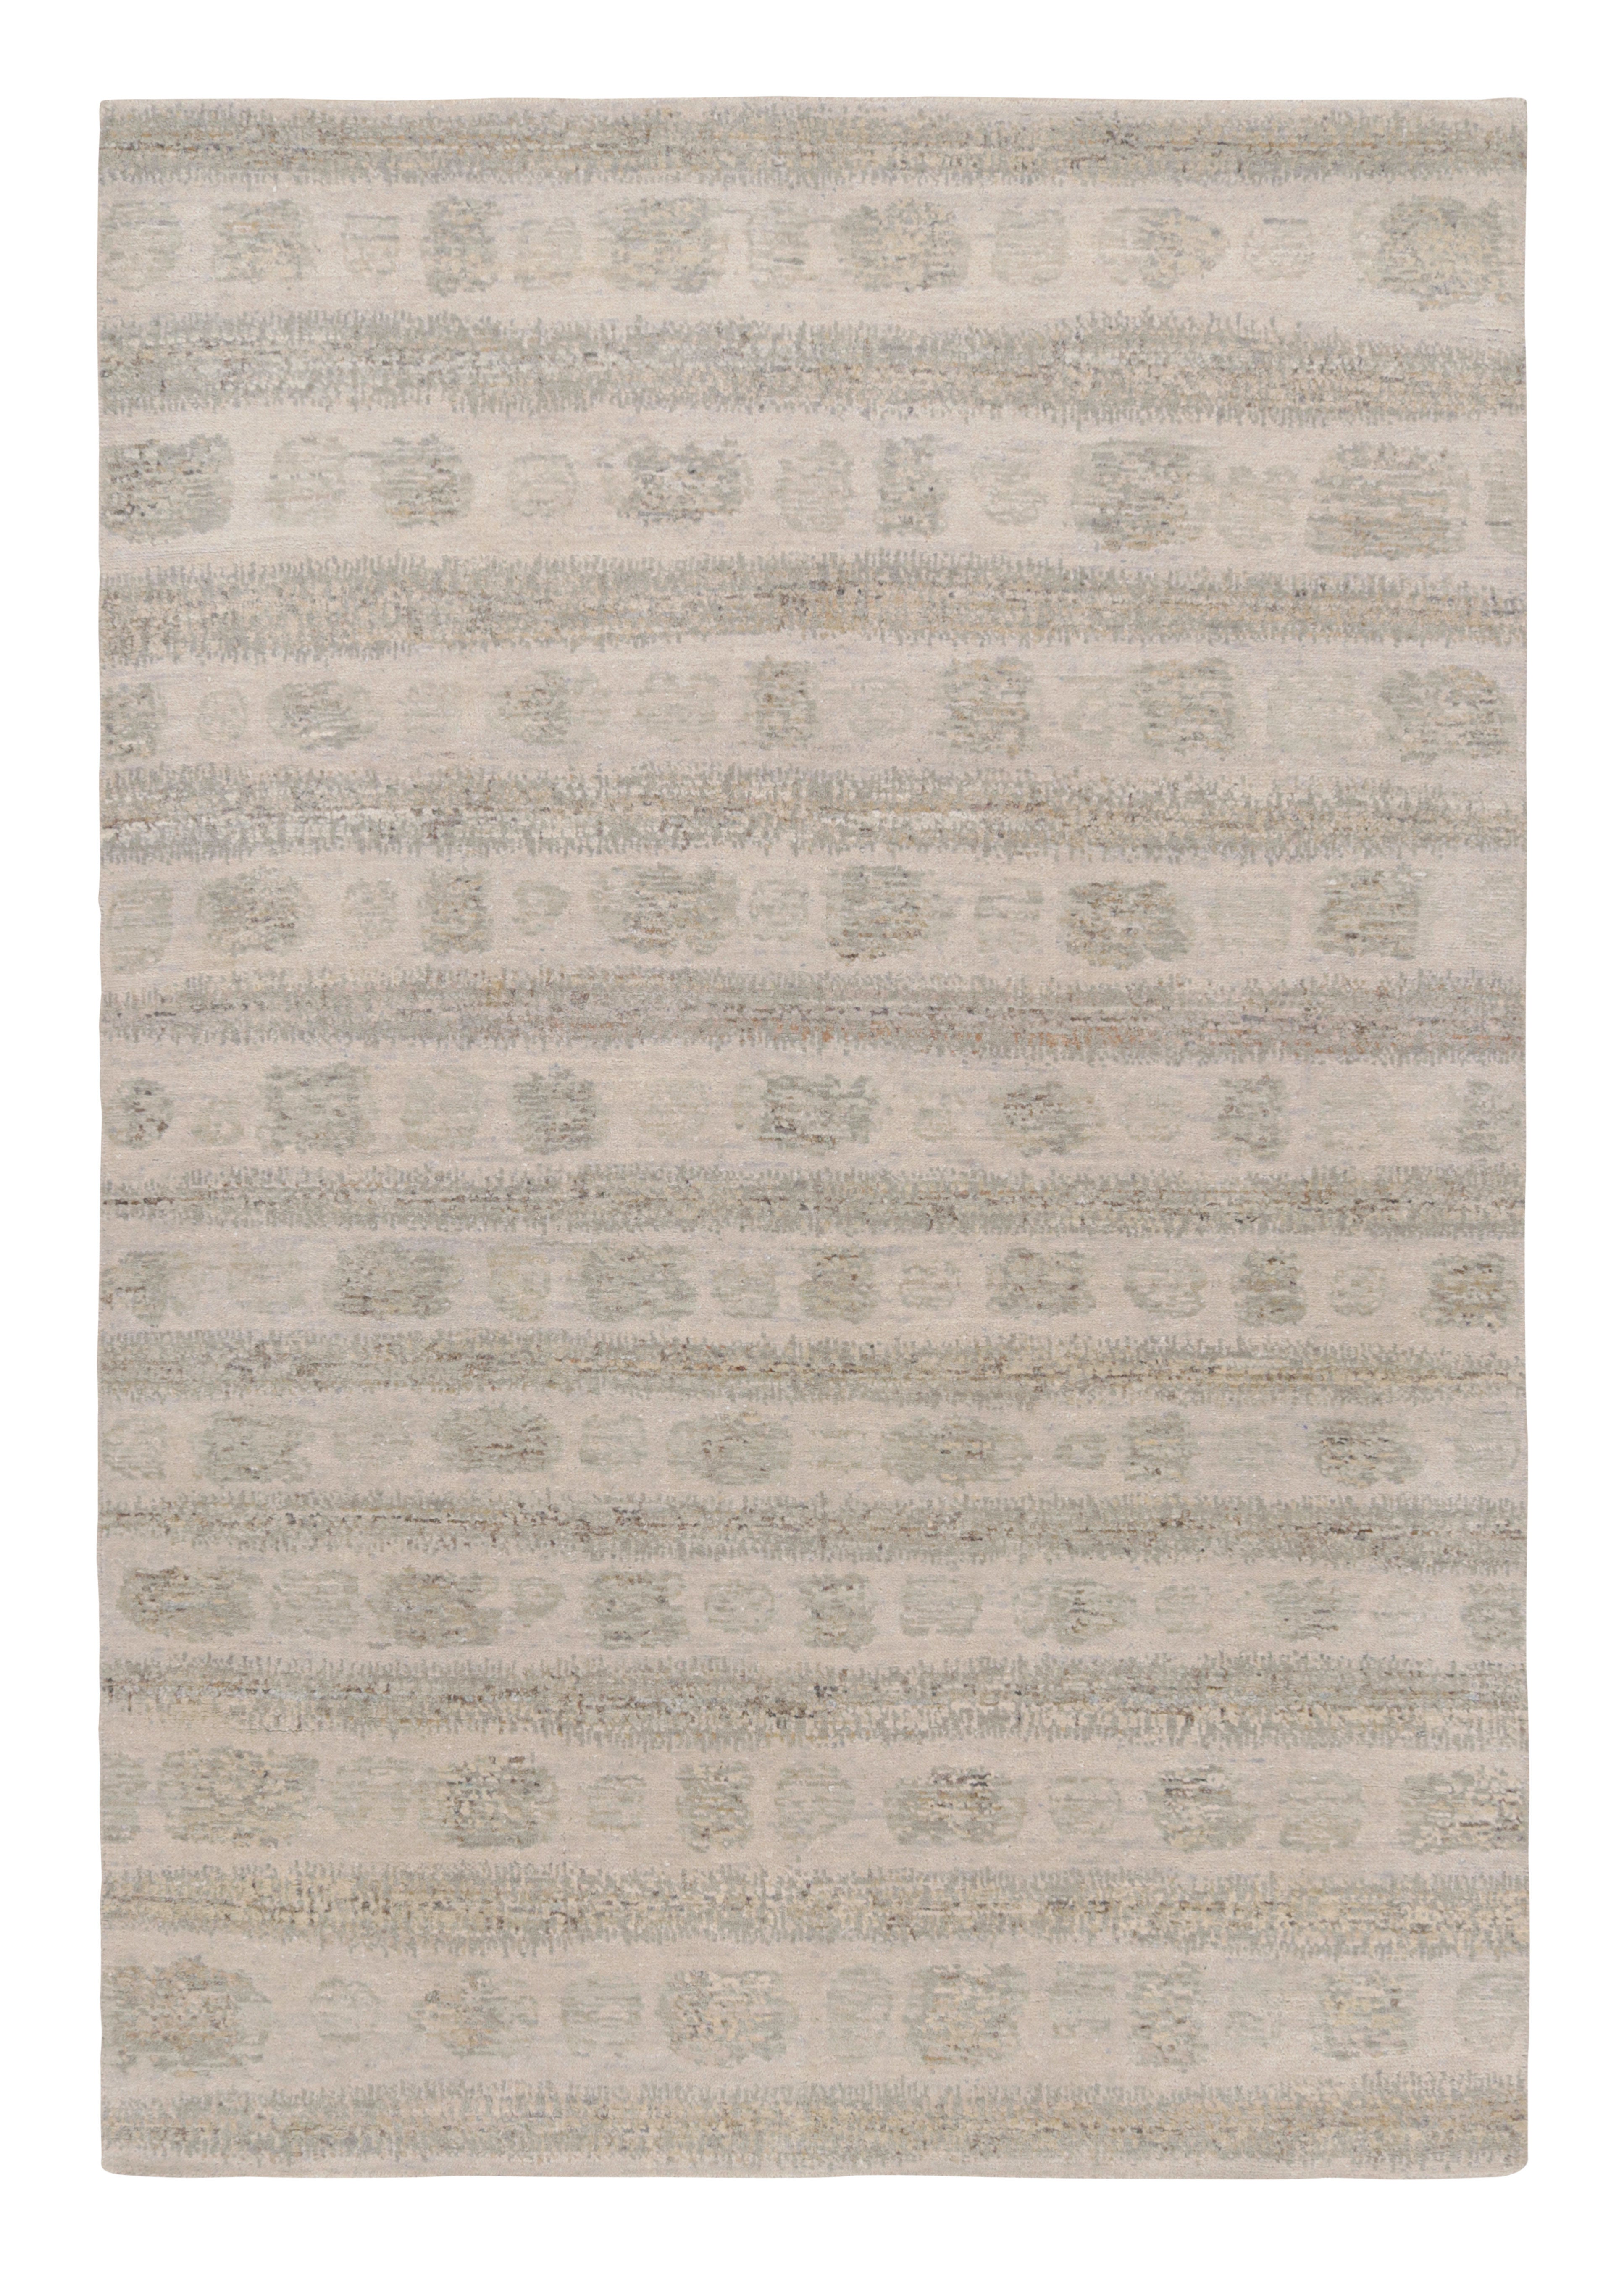 Rug & Kilim's Abstract Rug with Gray and Beige All Over Geometric Patterns (tapis abstrait à motifs géométriques gris et beige)